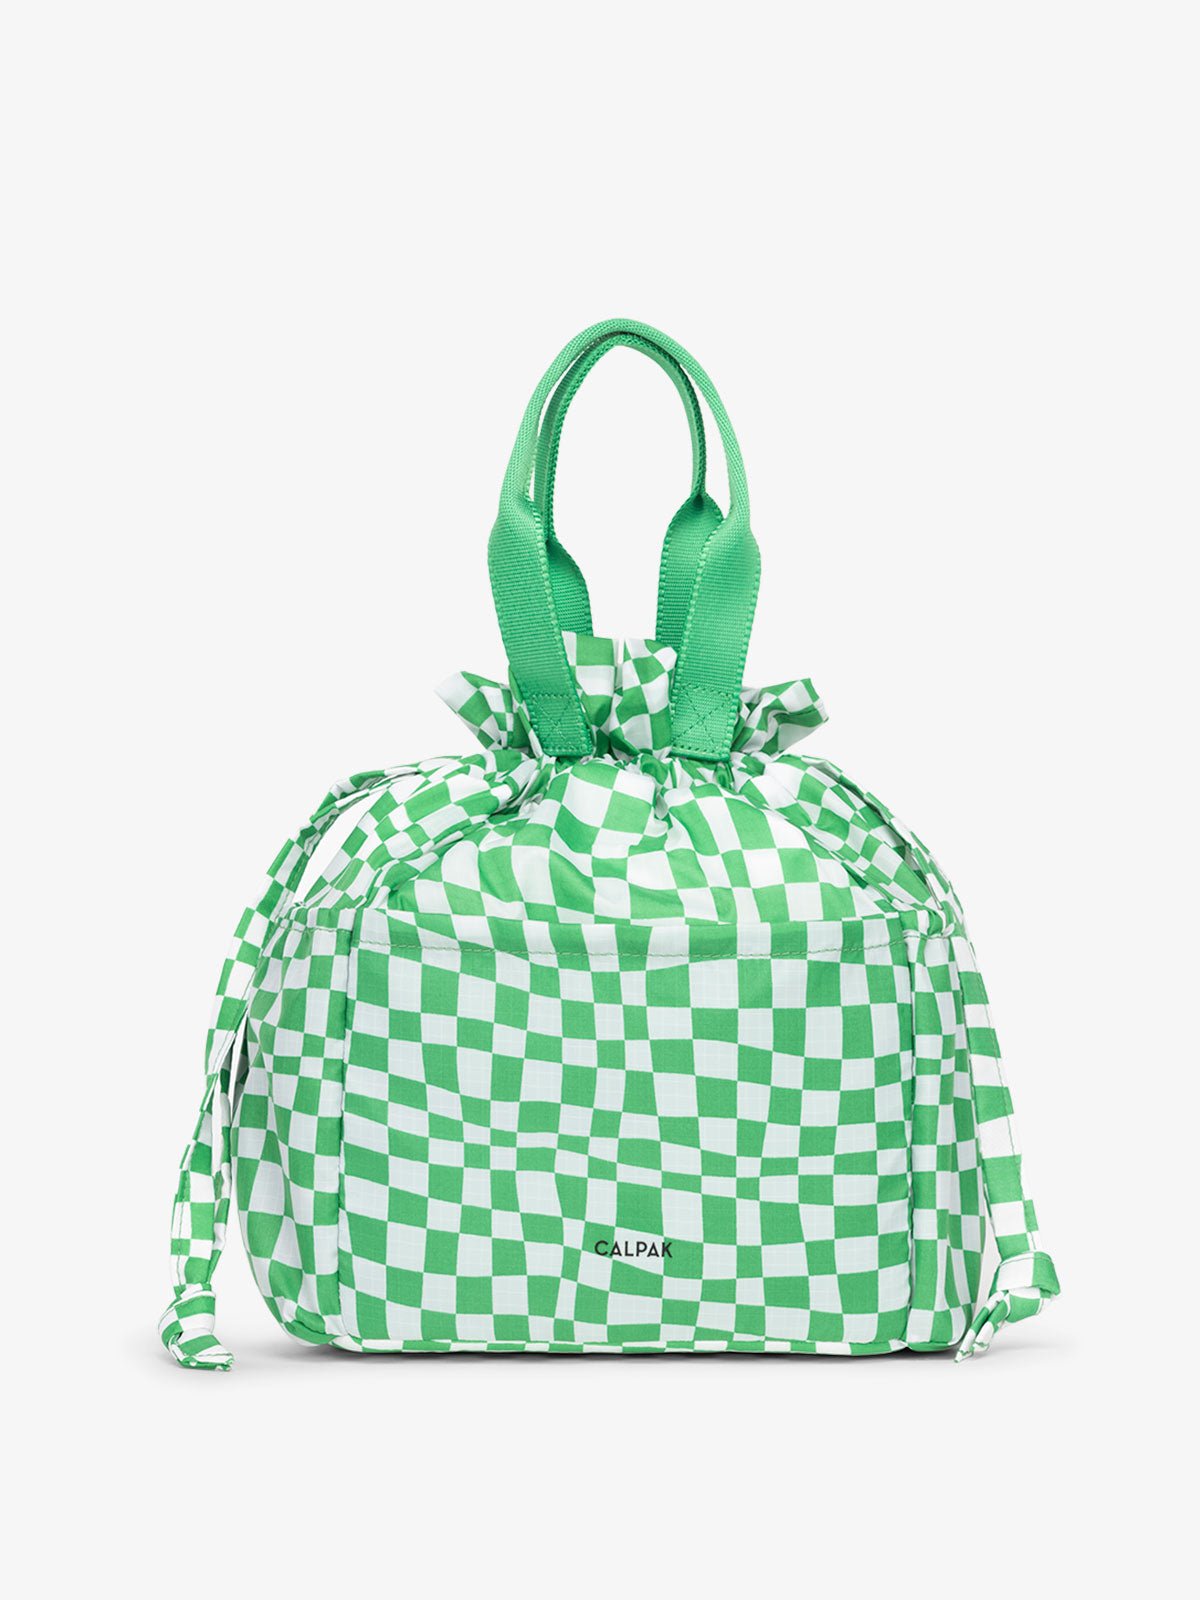 CALPAK Insulated Lunch Bag in green checkerboard print